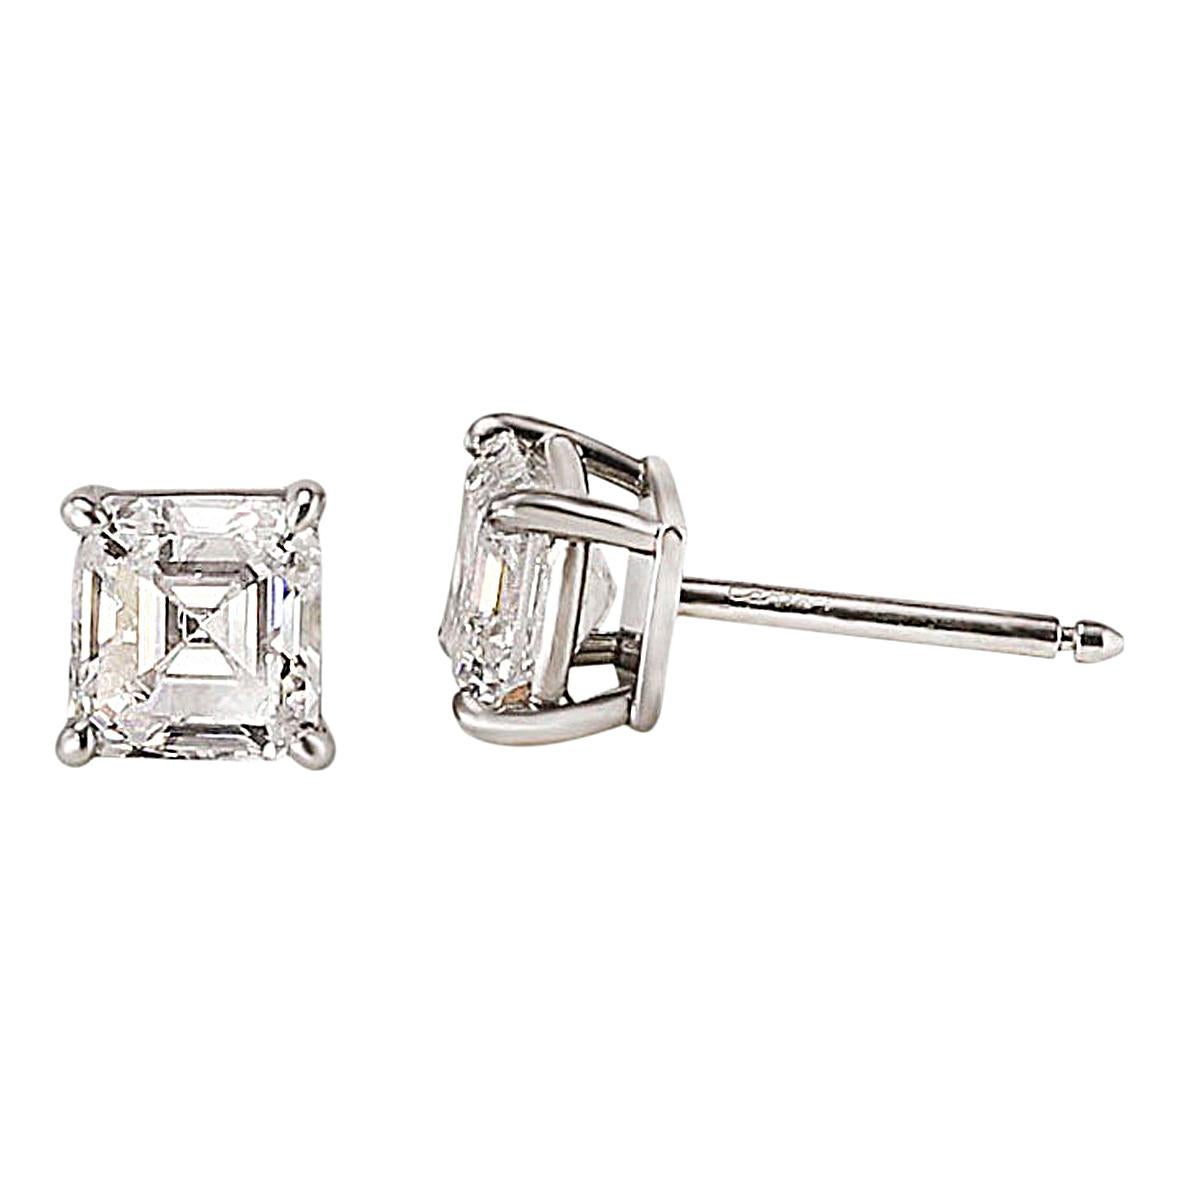 Cartier GIA Certified 2.24 Carat Emerald Cut Diamond Stud Earrings